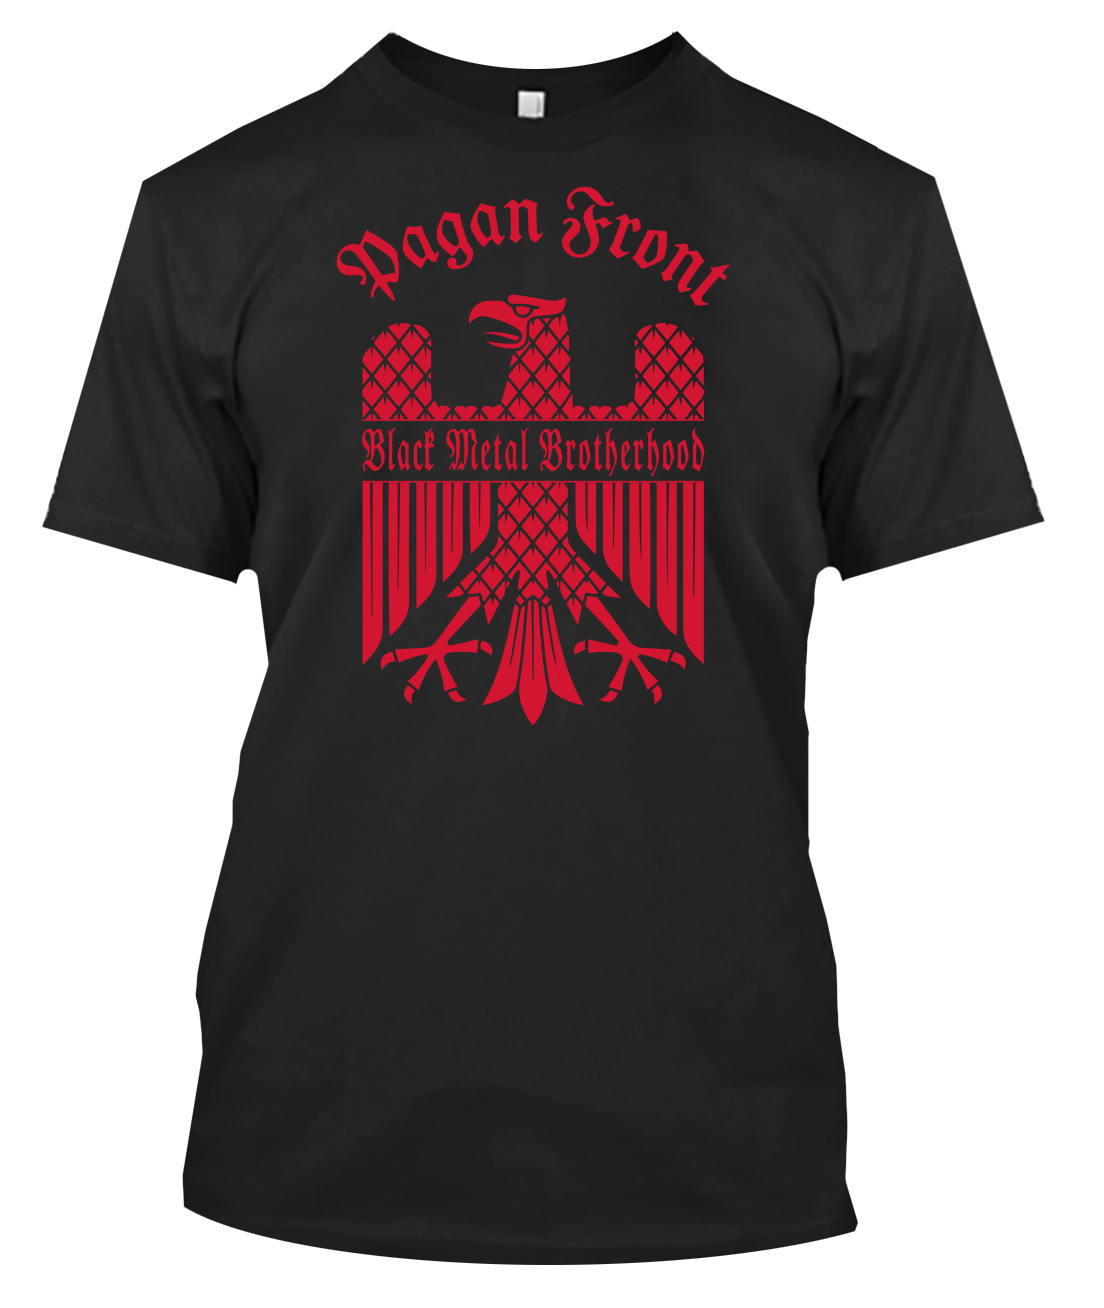 Pagan Front - Black Metal Brotherhood tshirt image 1